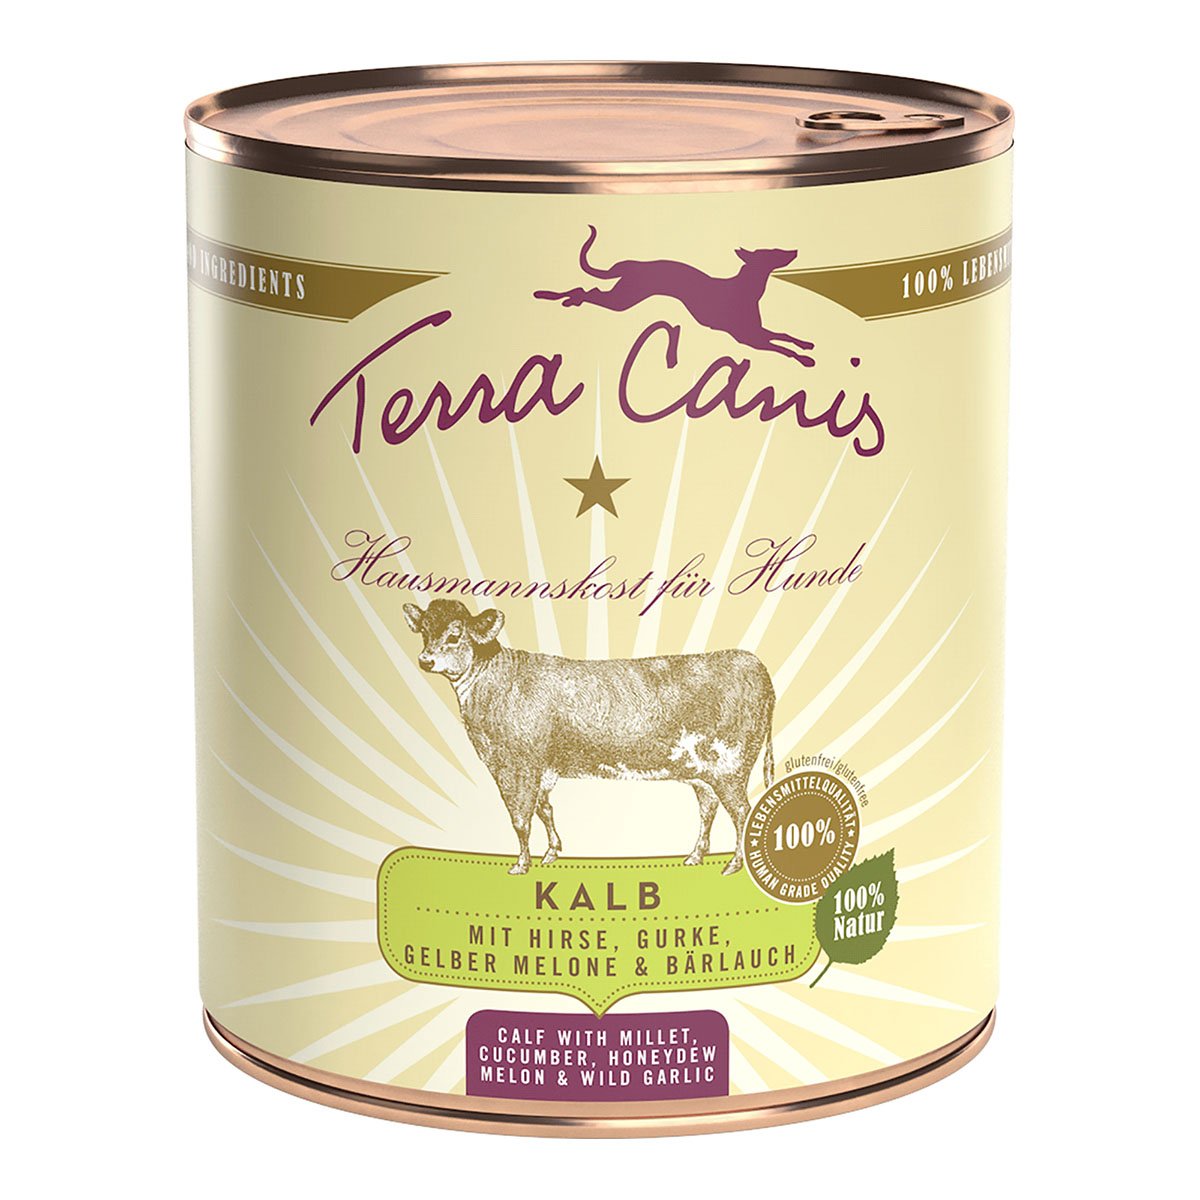 Terra Canis CLASSIC Kalb mit Hirse, Gurke, Melone 12x800g von Terra Canis